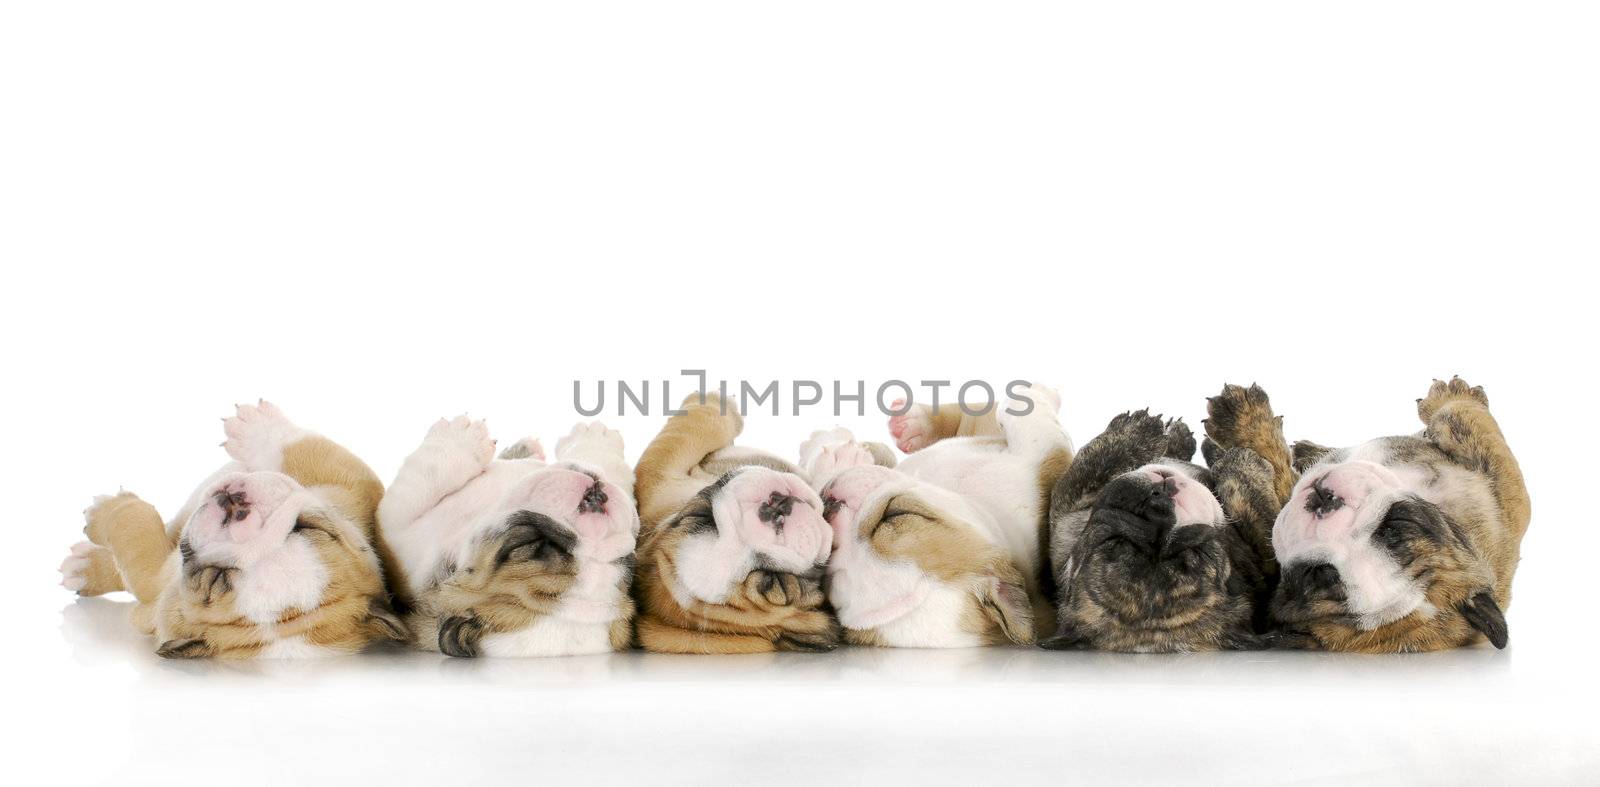  sleeping puppies - litter of sleeping english bulldog puppies on white background - 4 weeks old